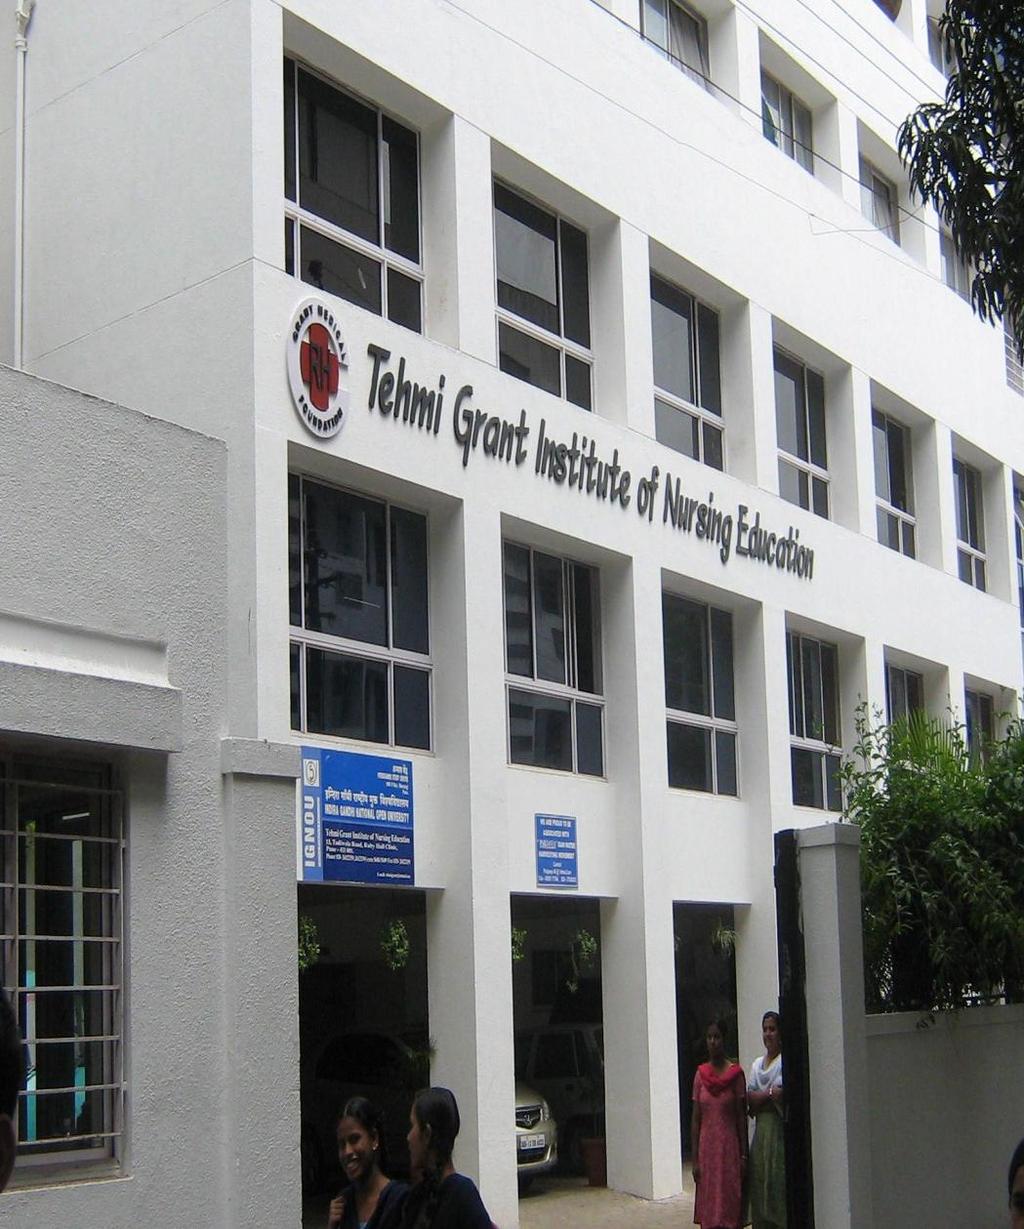 PROSPECTUS GRANT MEDICAL FOUNDATION S Tehmi Grant Institute of Nursing Education 13, Tadiwala Road, Opp.